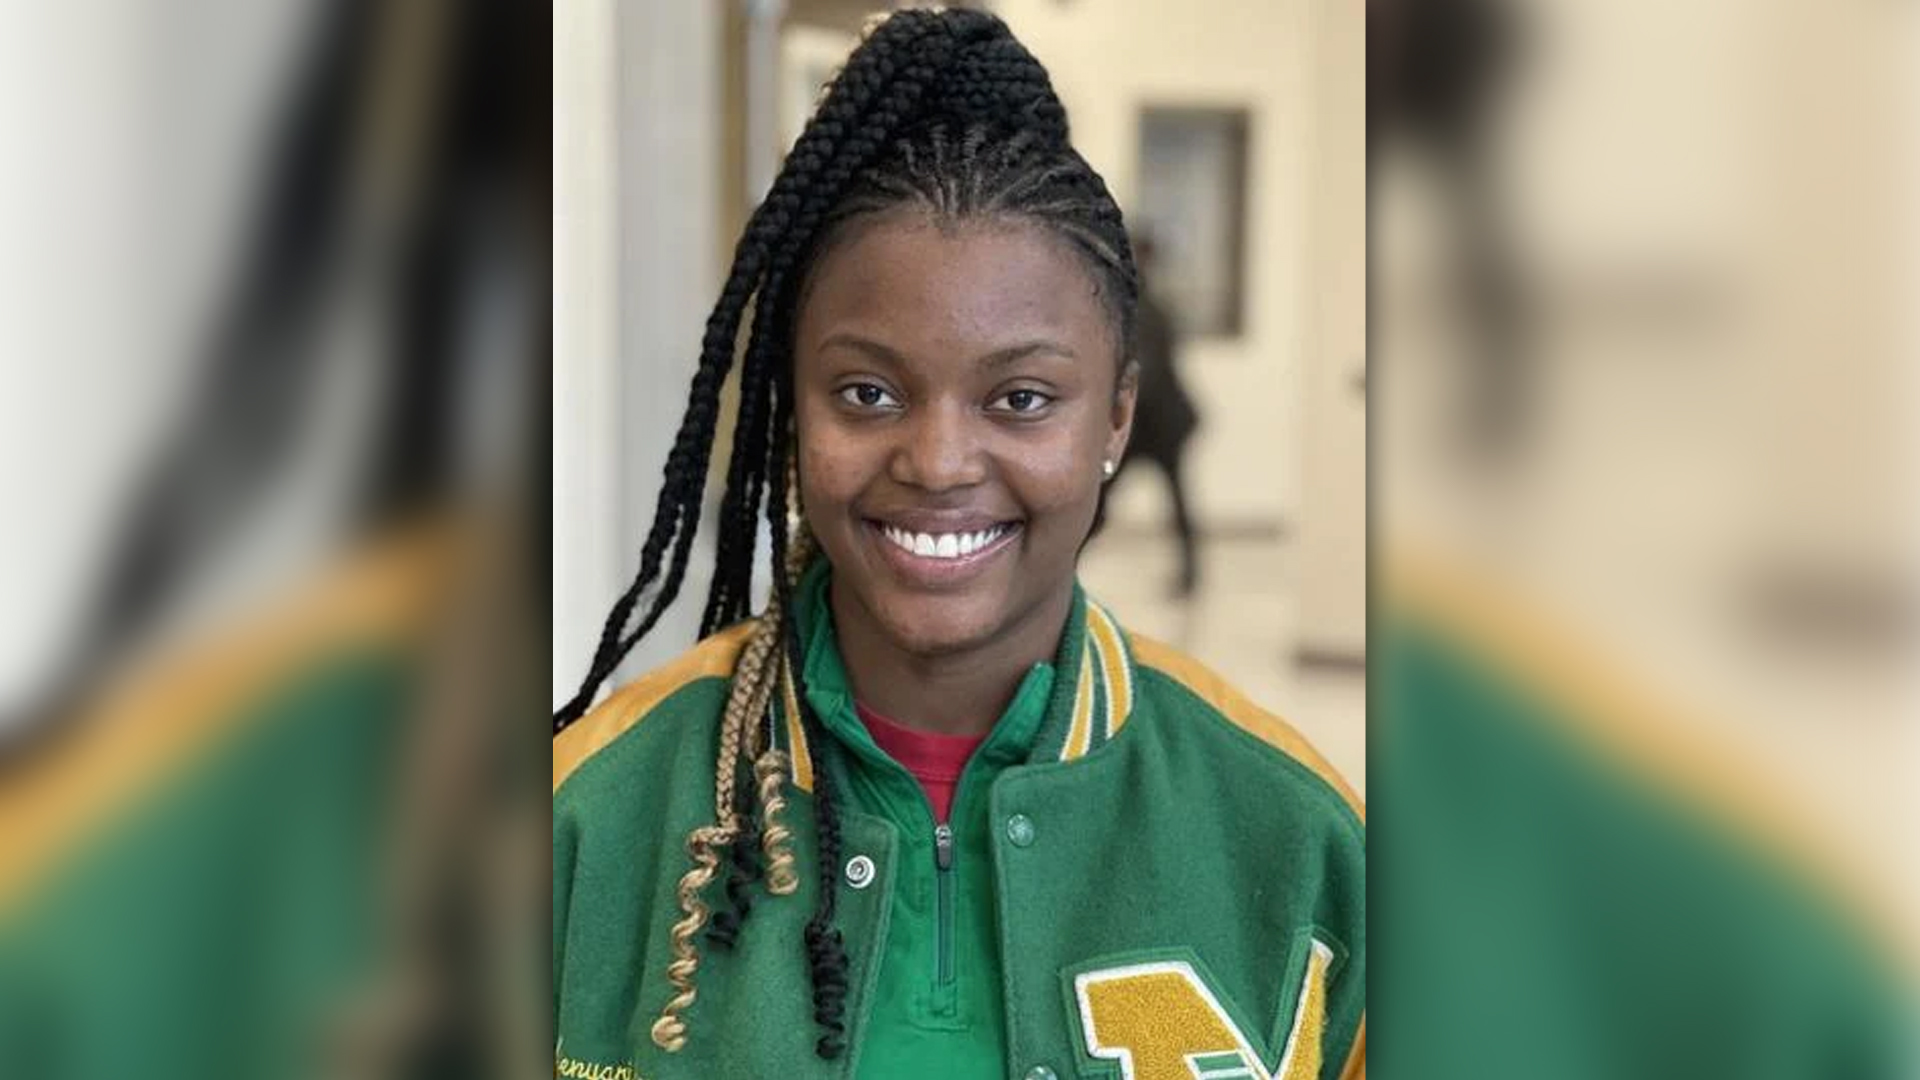 Meet Kenyari Sawyer, A Georgia Teen Admitted To Nearly 100 Schools Who Earned $600K In Scholarships